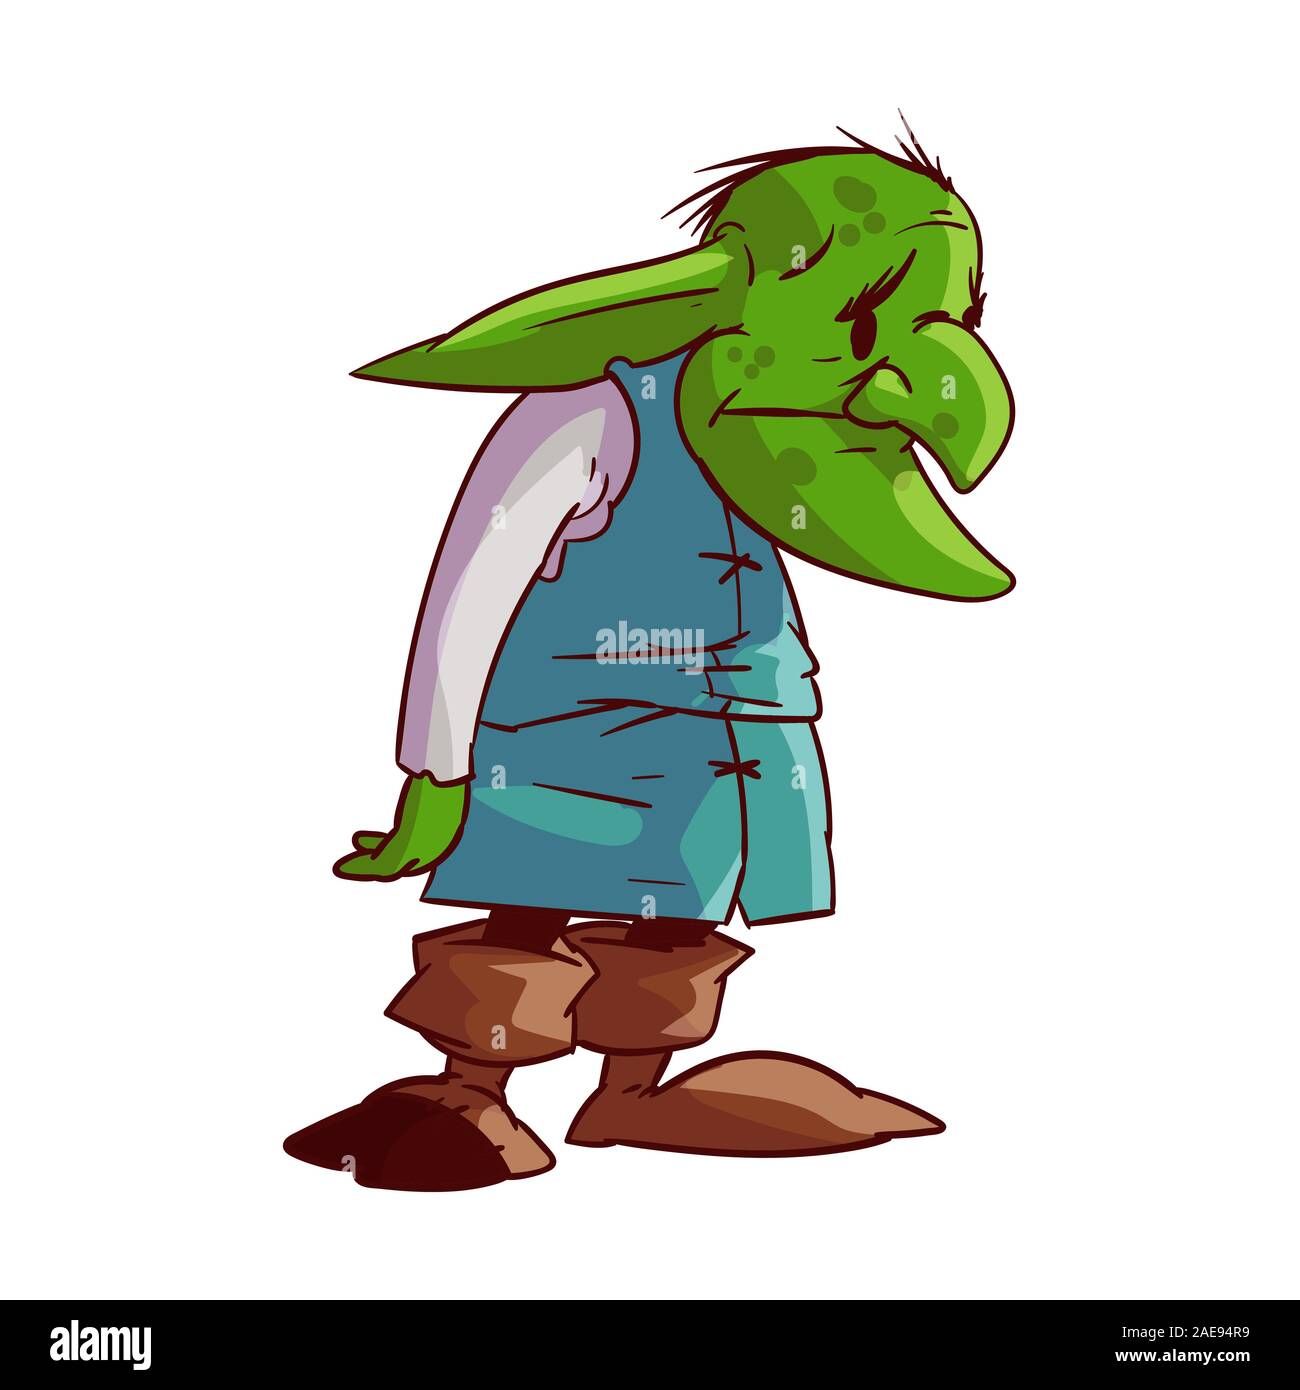 Colorful vector illustration of a cartoonish, comic style sad green goblin or troll Stock Vector